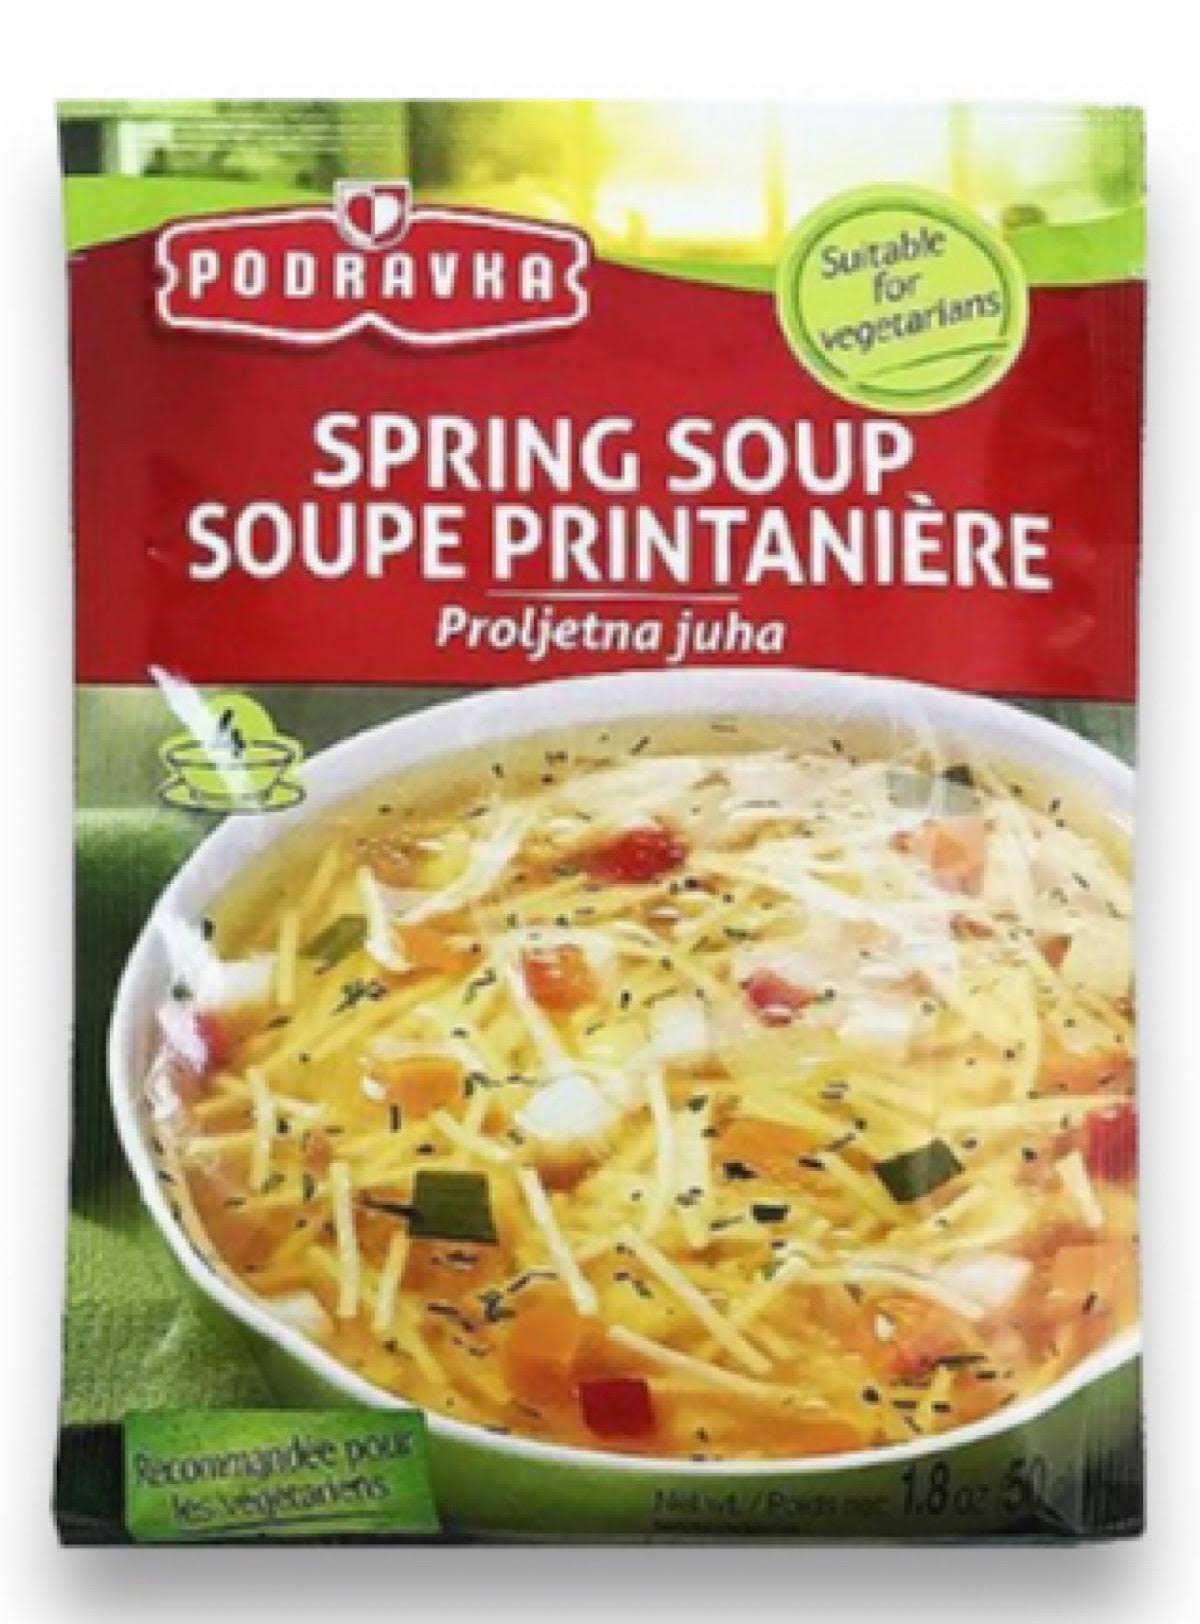 Podravka Spring Soup 1.8 oz